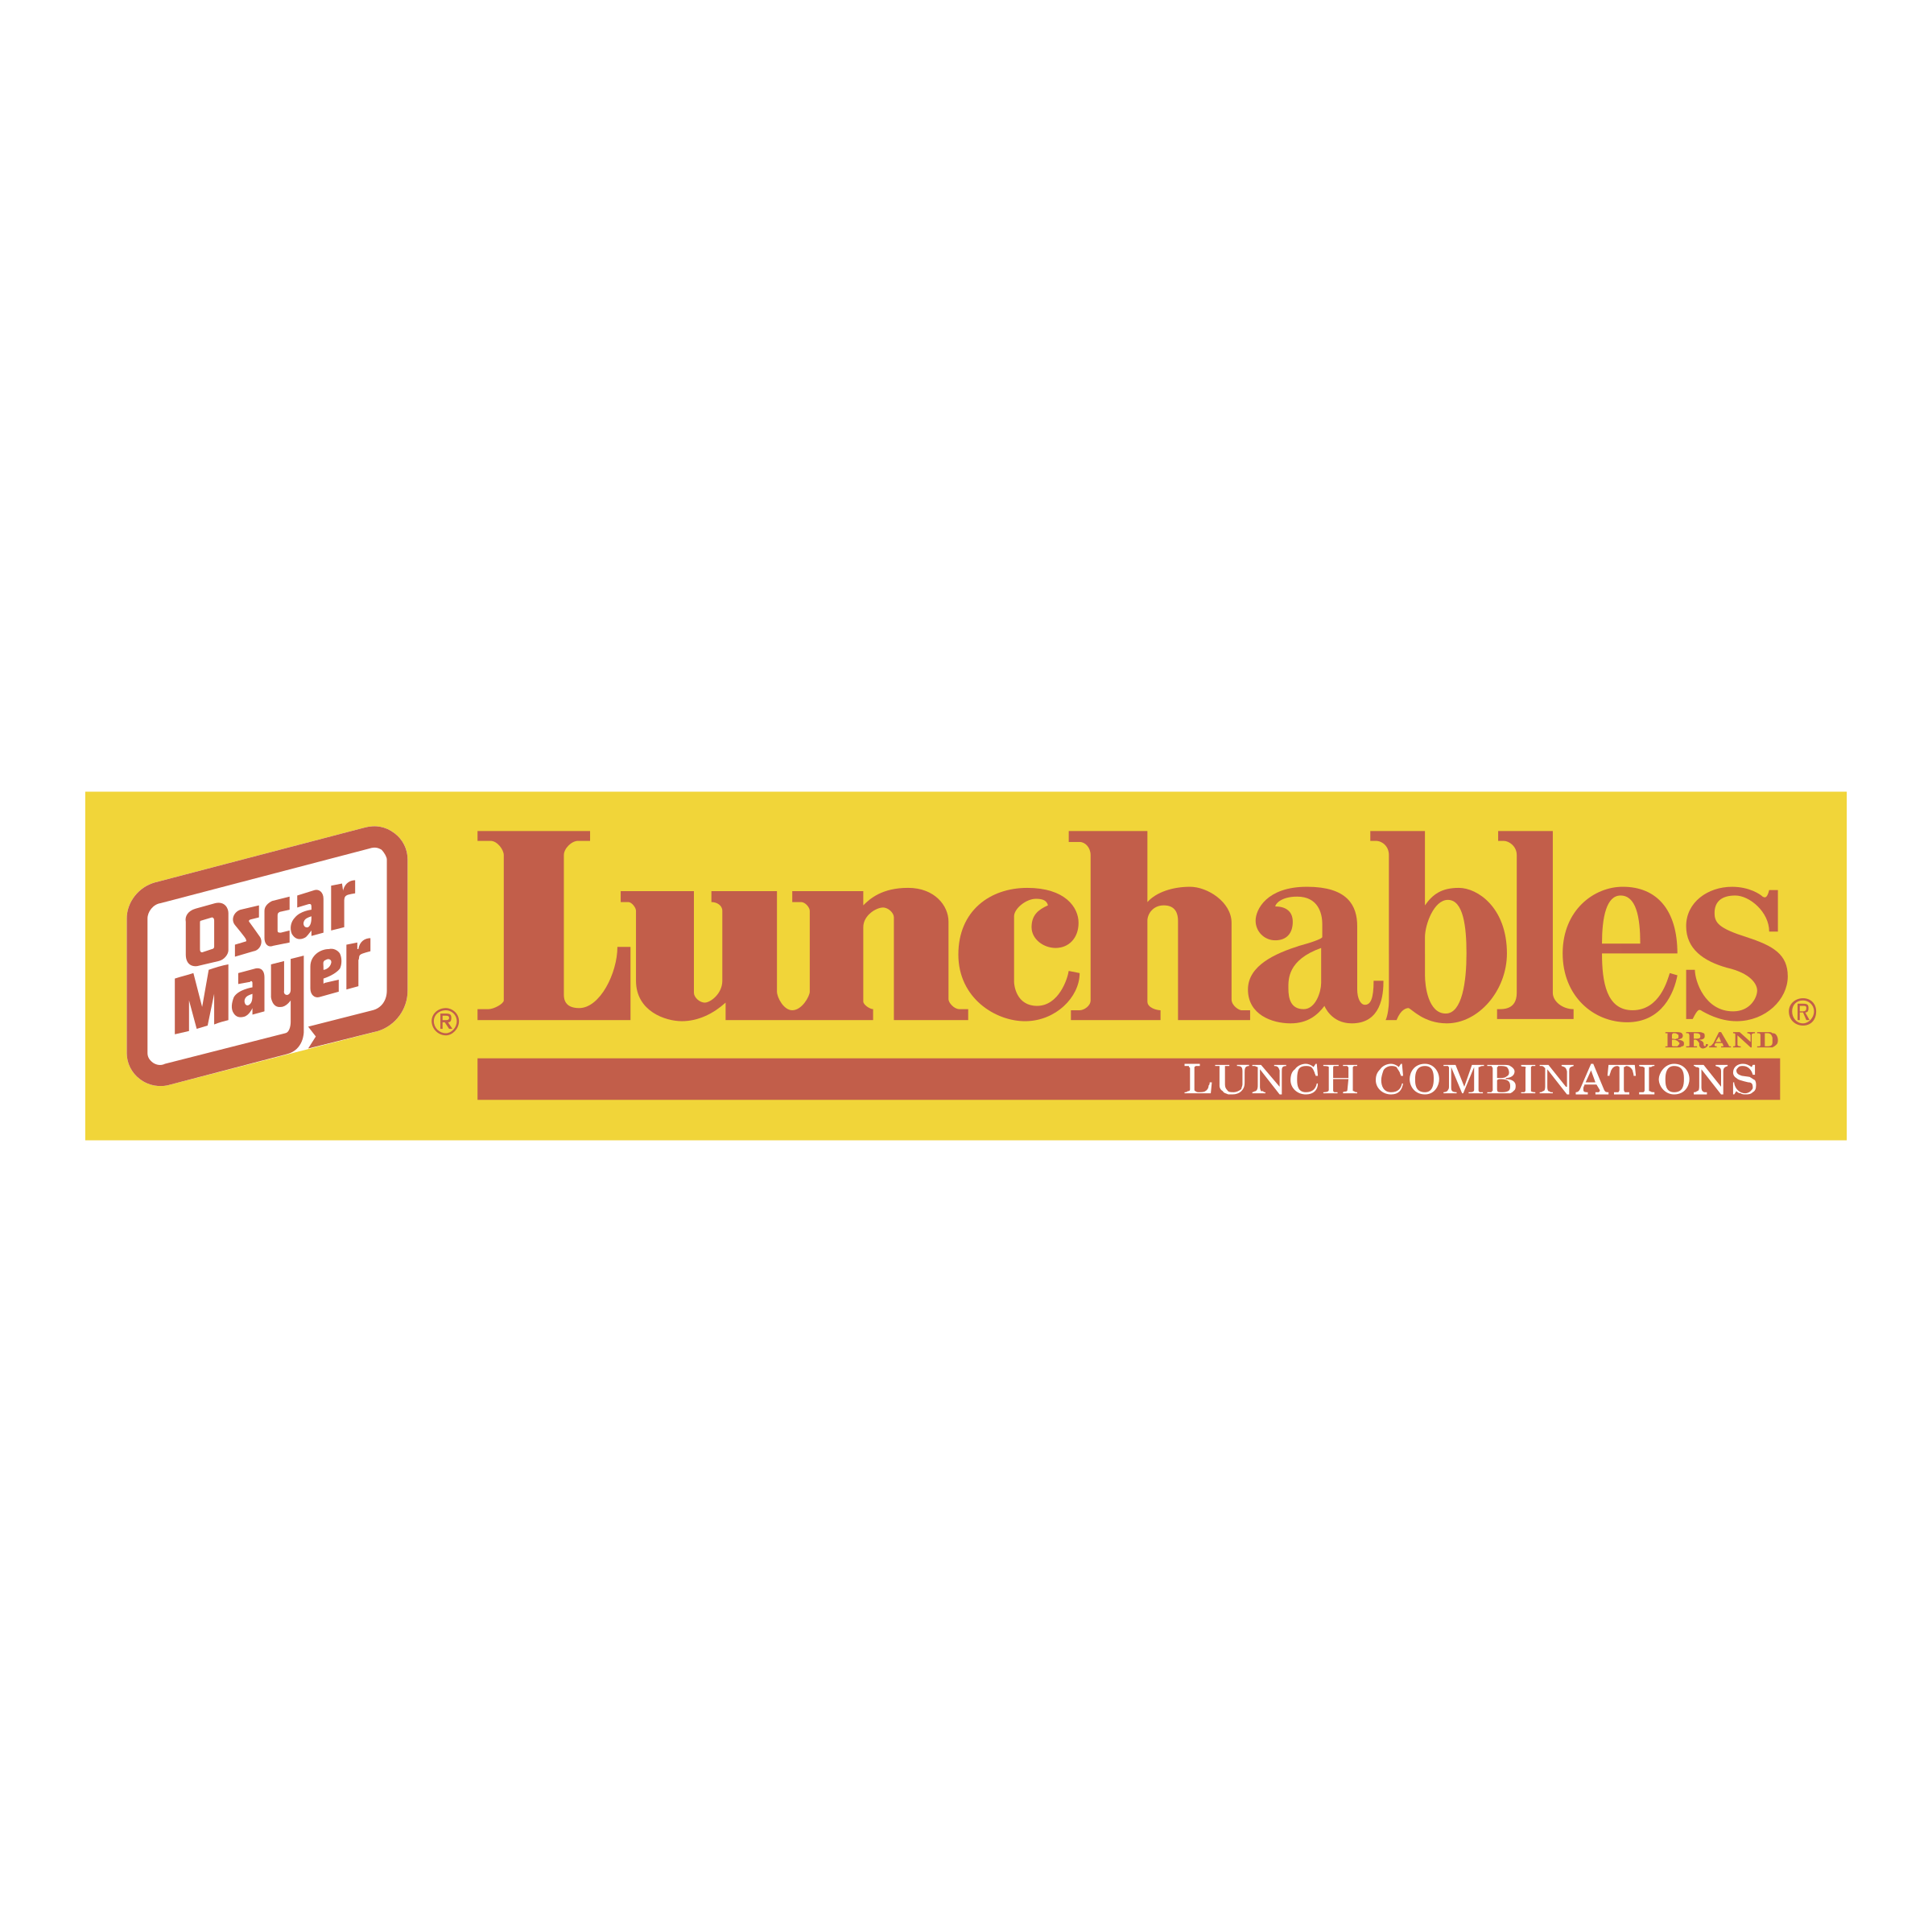 Lunchables Logo - Lunchables Logo PNG Transparent & SVG Vector